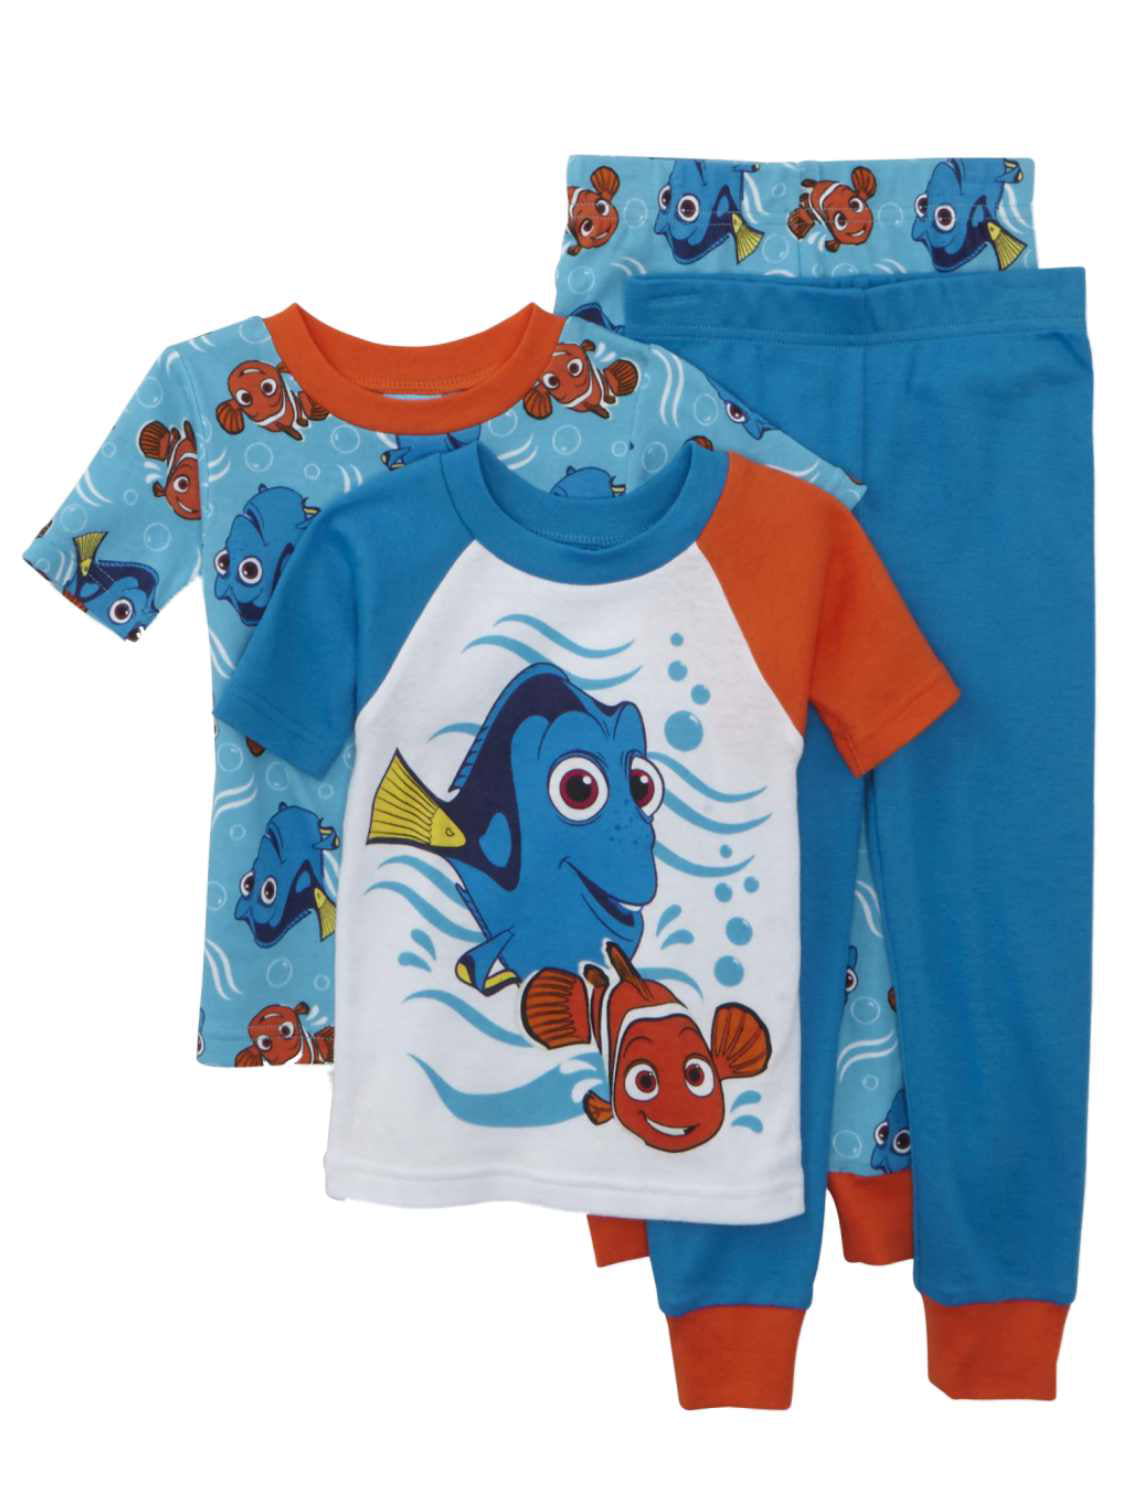 Finding Dory Nemo Size 3T Boys Cotton Pajama Pants Set